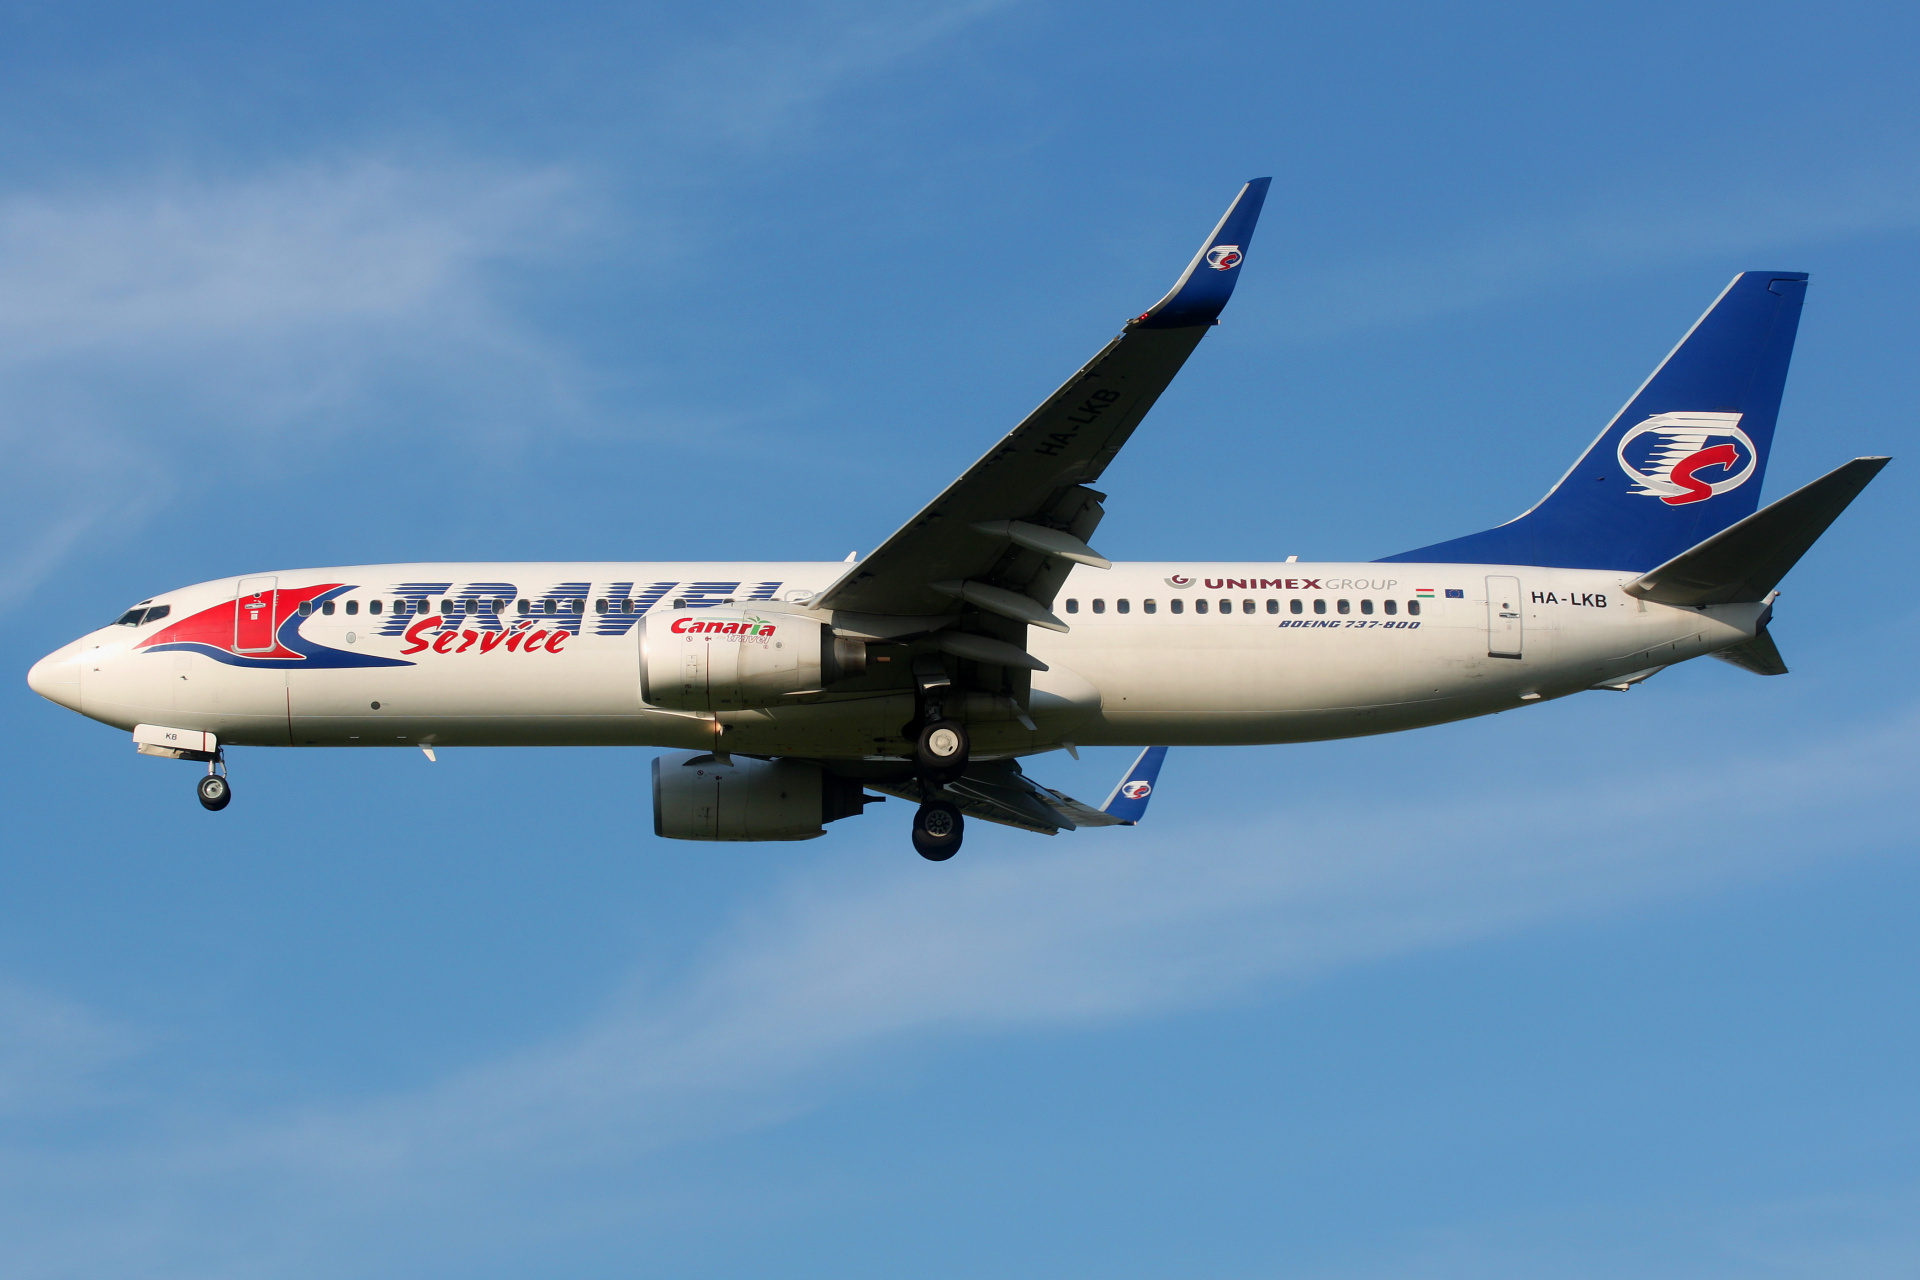 HA-LKB, Travel Service Hungary (Aircraft » EPWA Spotting » Boeing 737-800 » Travel Service Airlines)